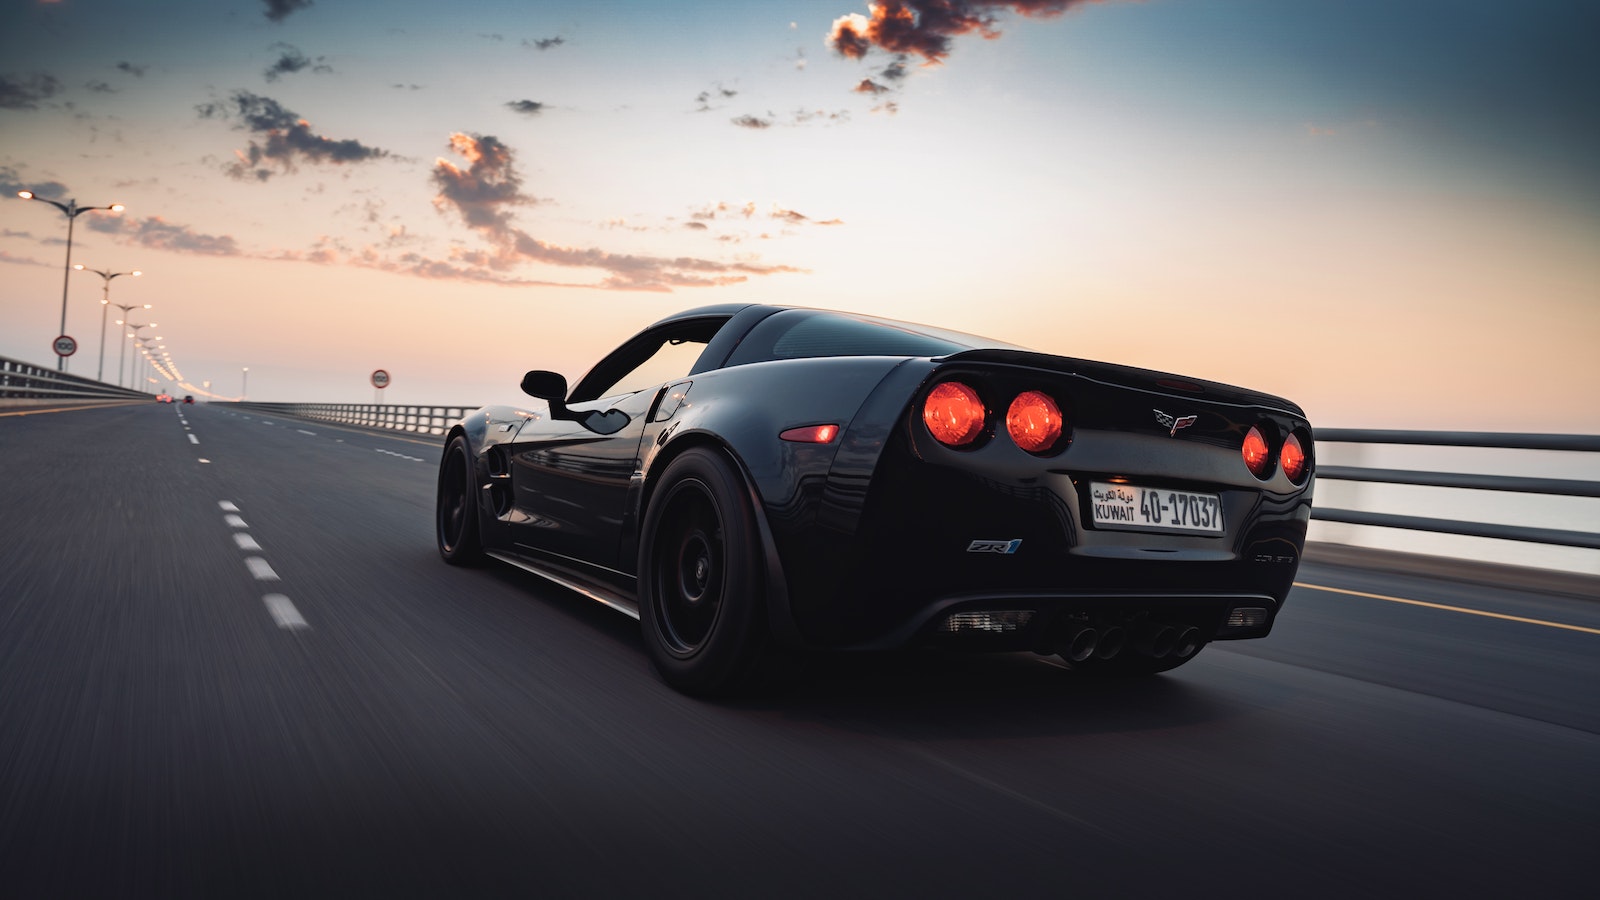 Black Corvette Driving on the Road